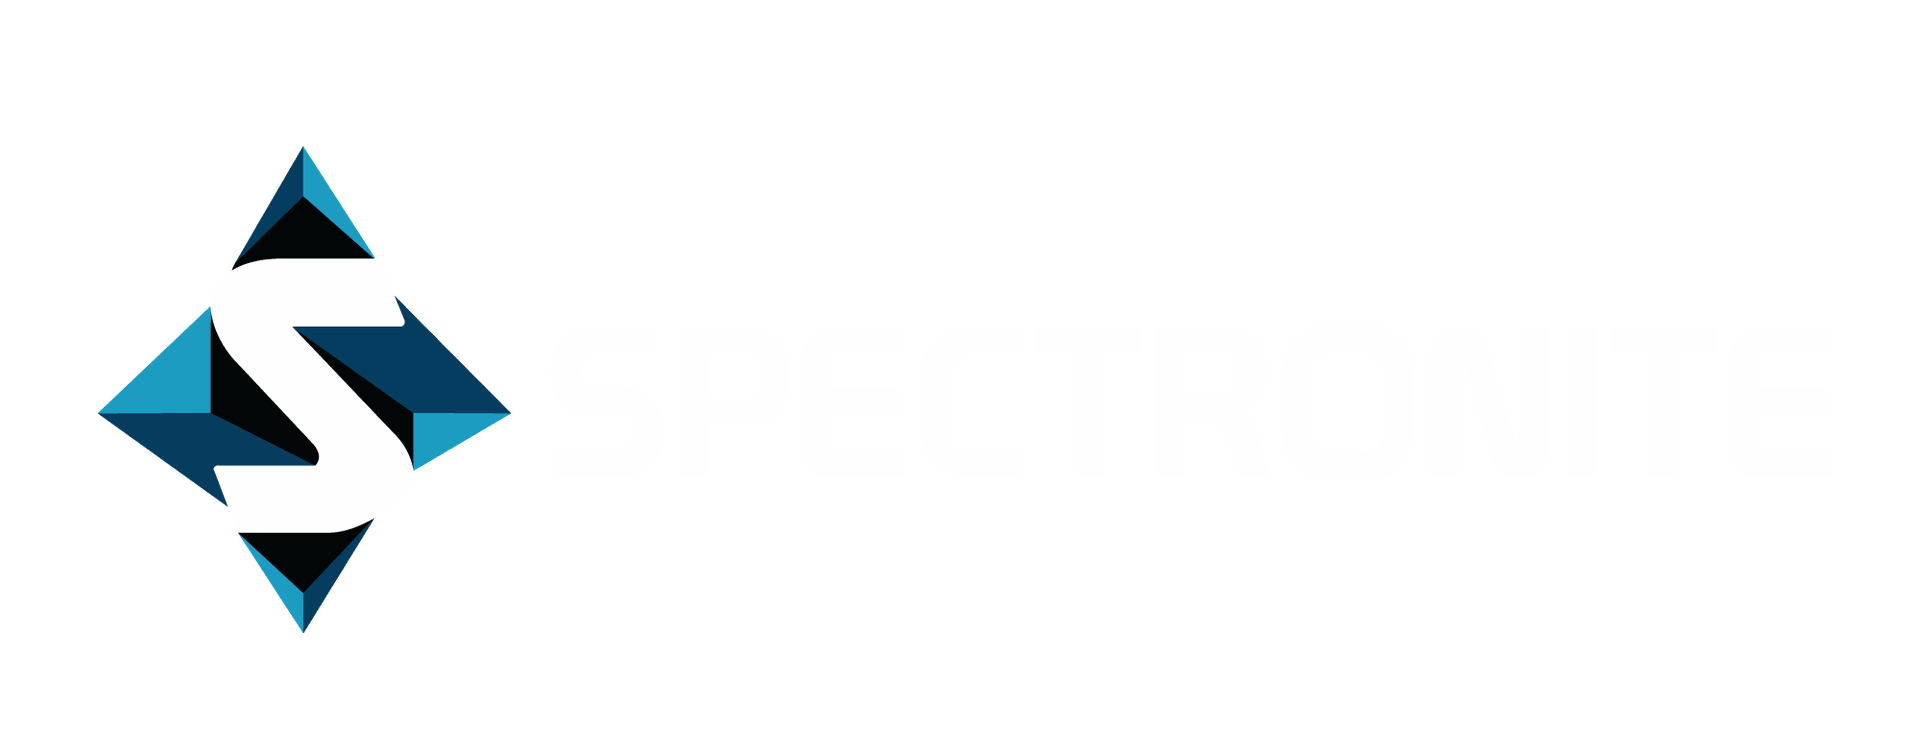 www.spectronite.com